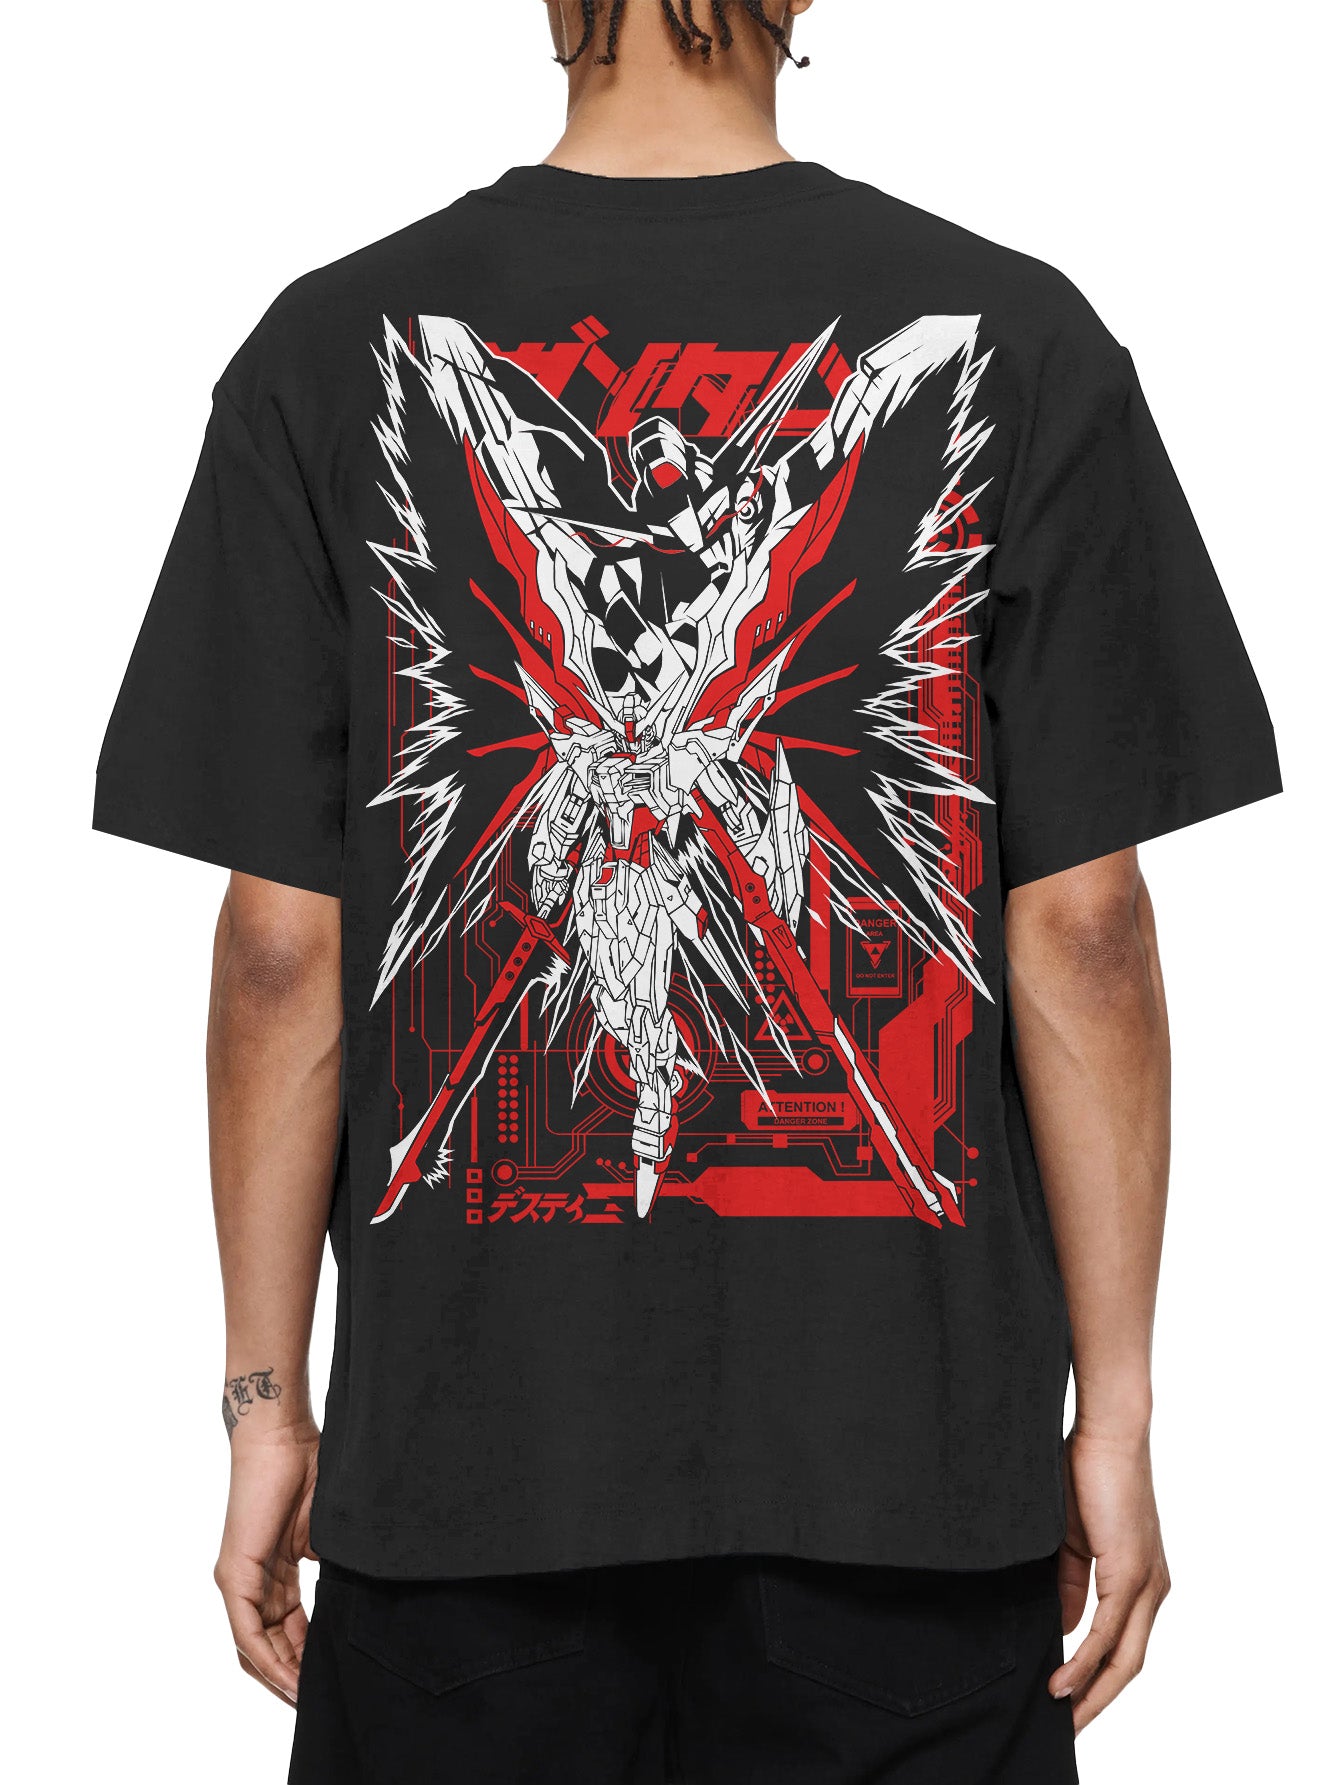 MSG Destiny V2 Oversize T-Shirt